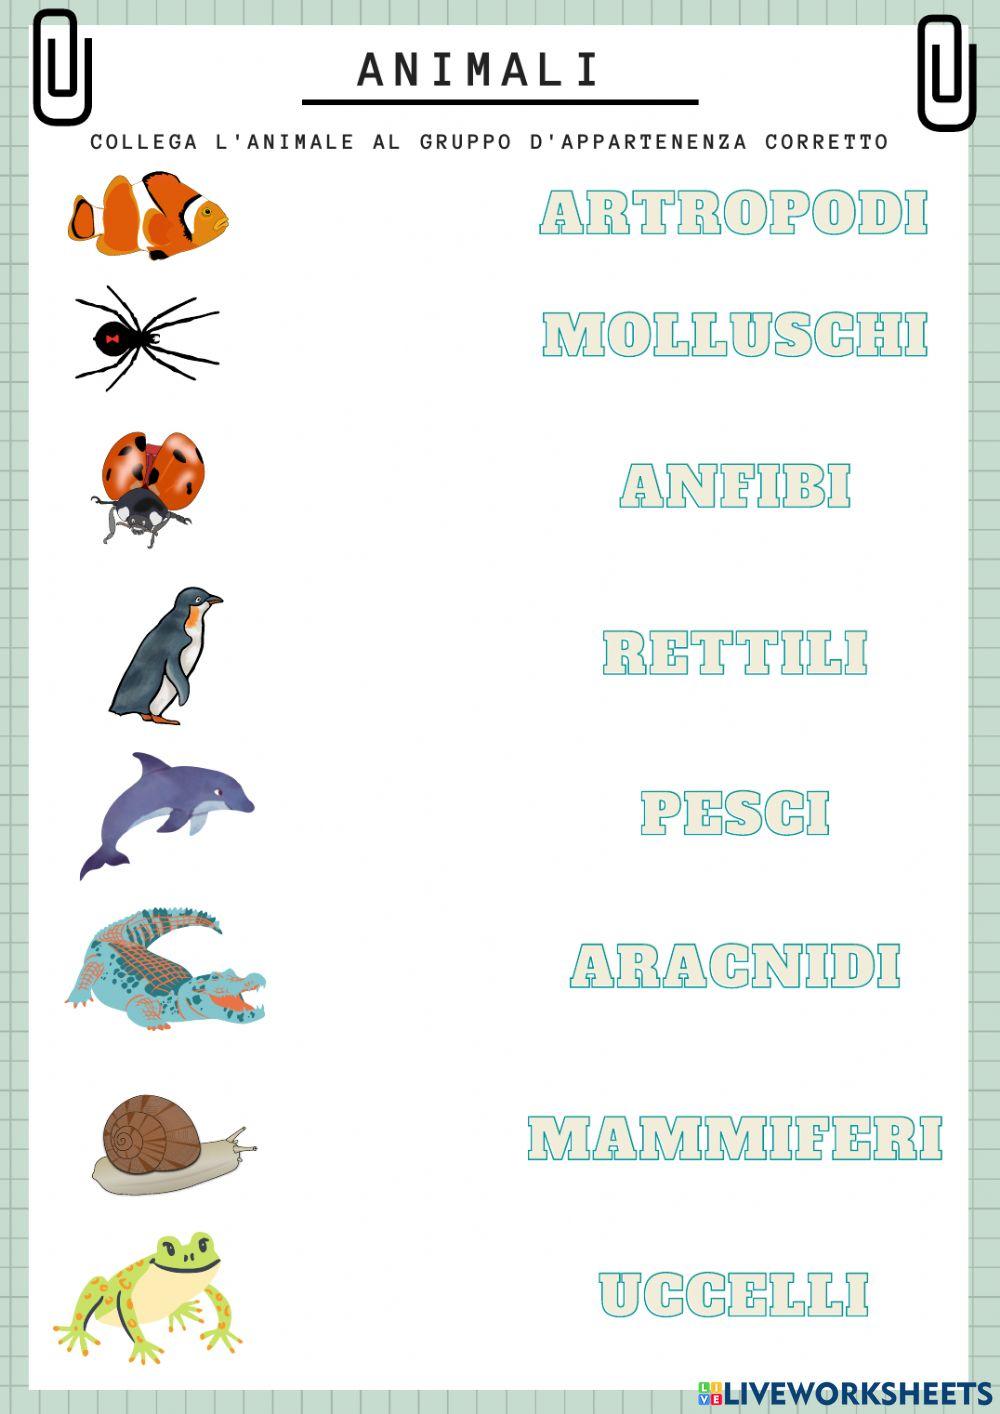 Animali - gruppi di invertebrati e vertebrati